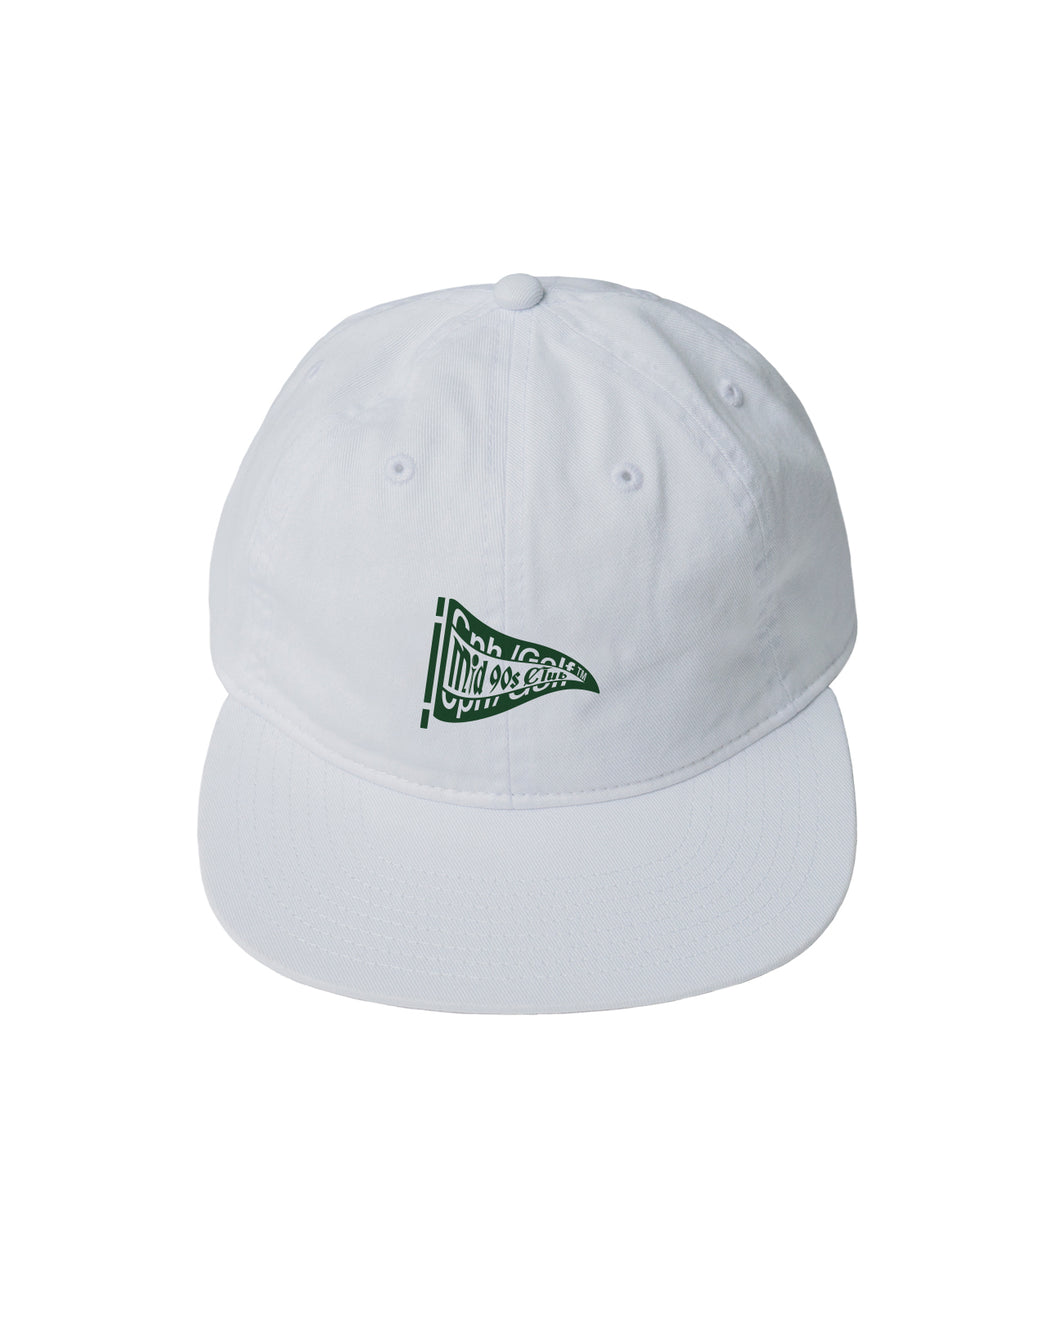 BRIGHT SIDE CAP - White